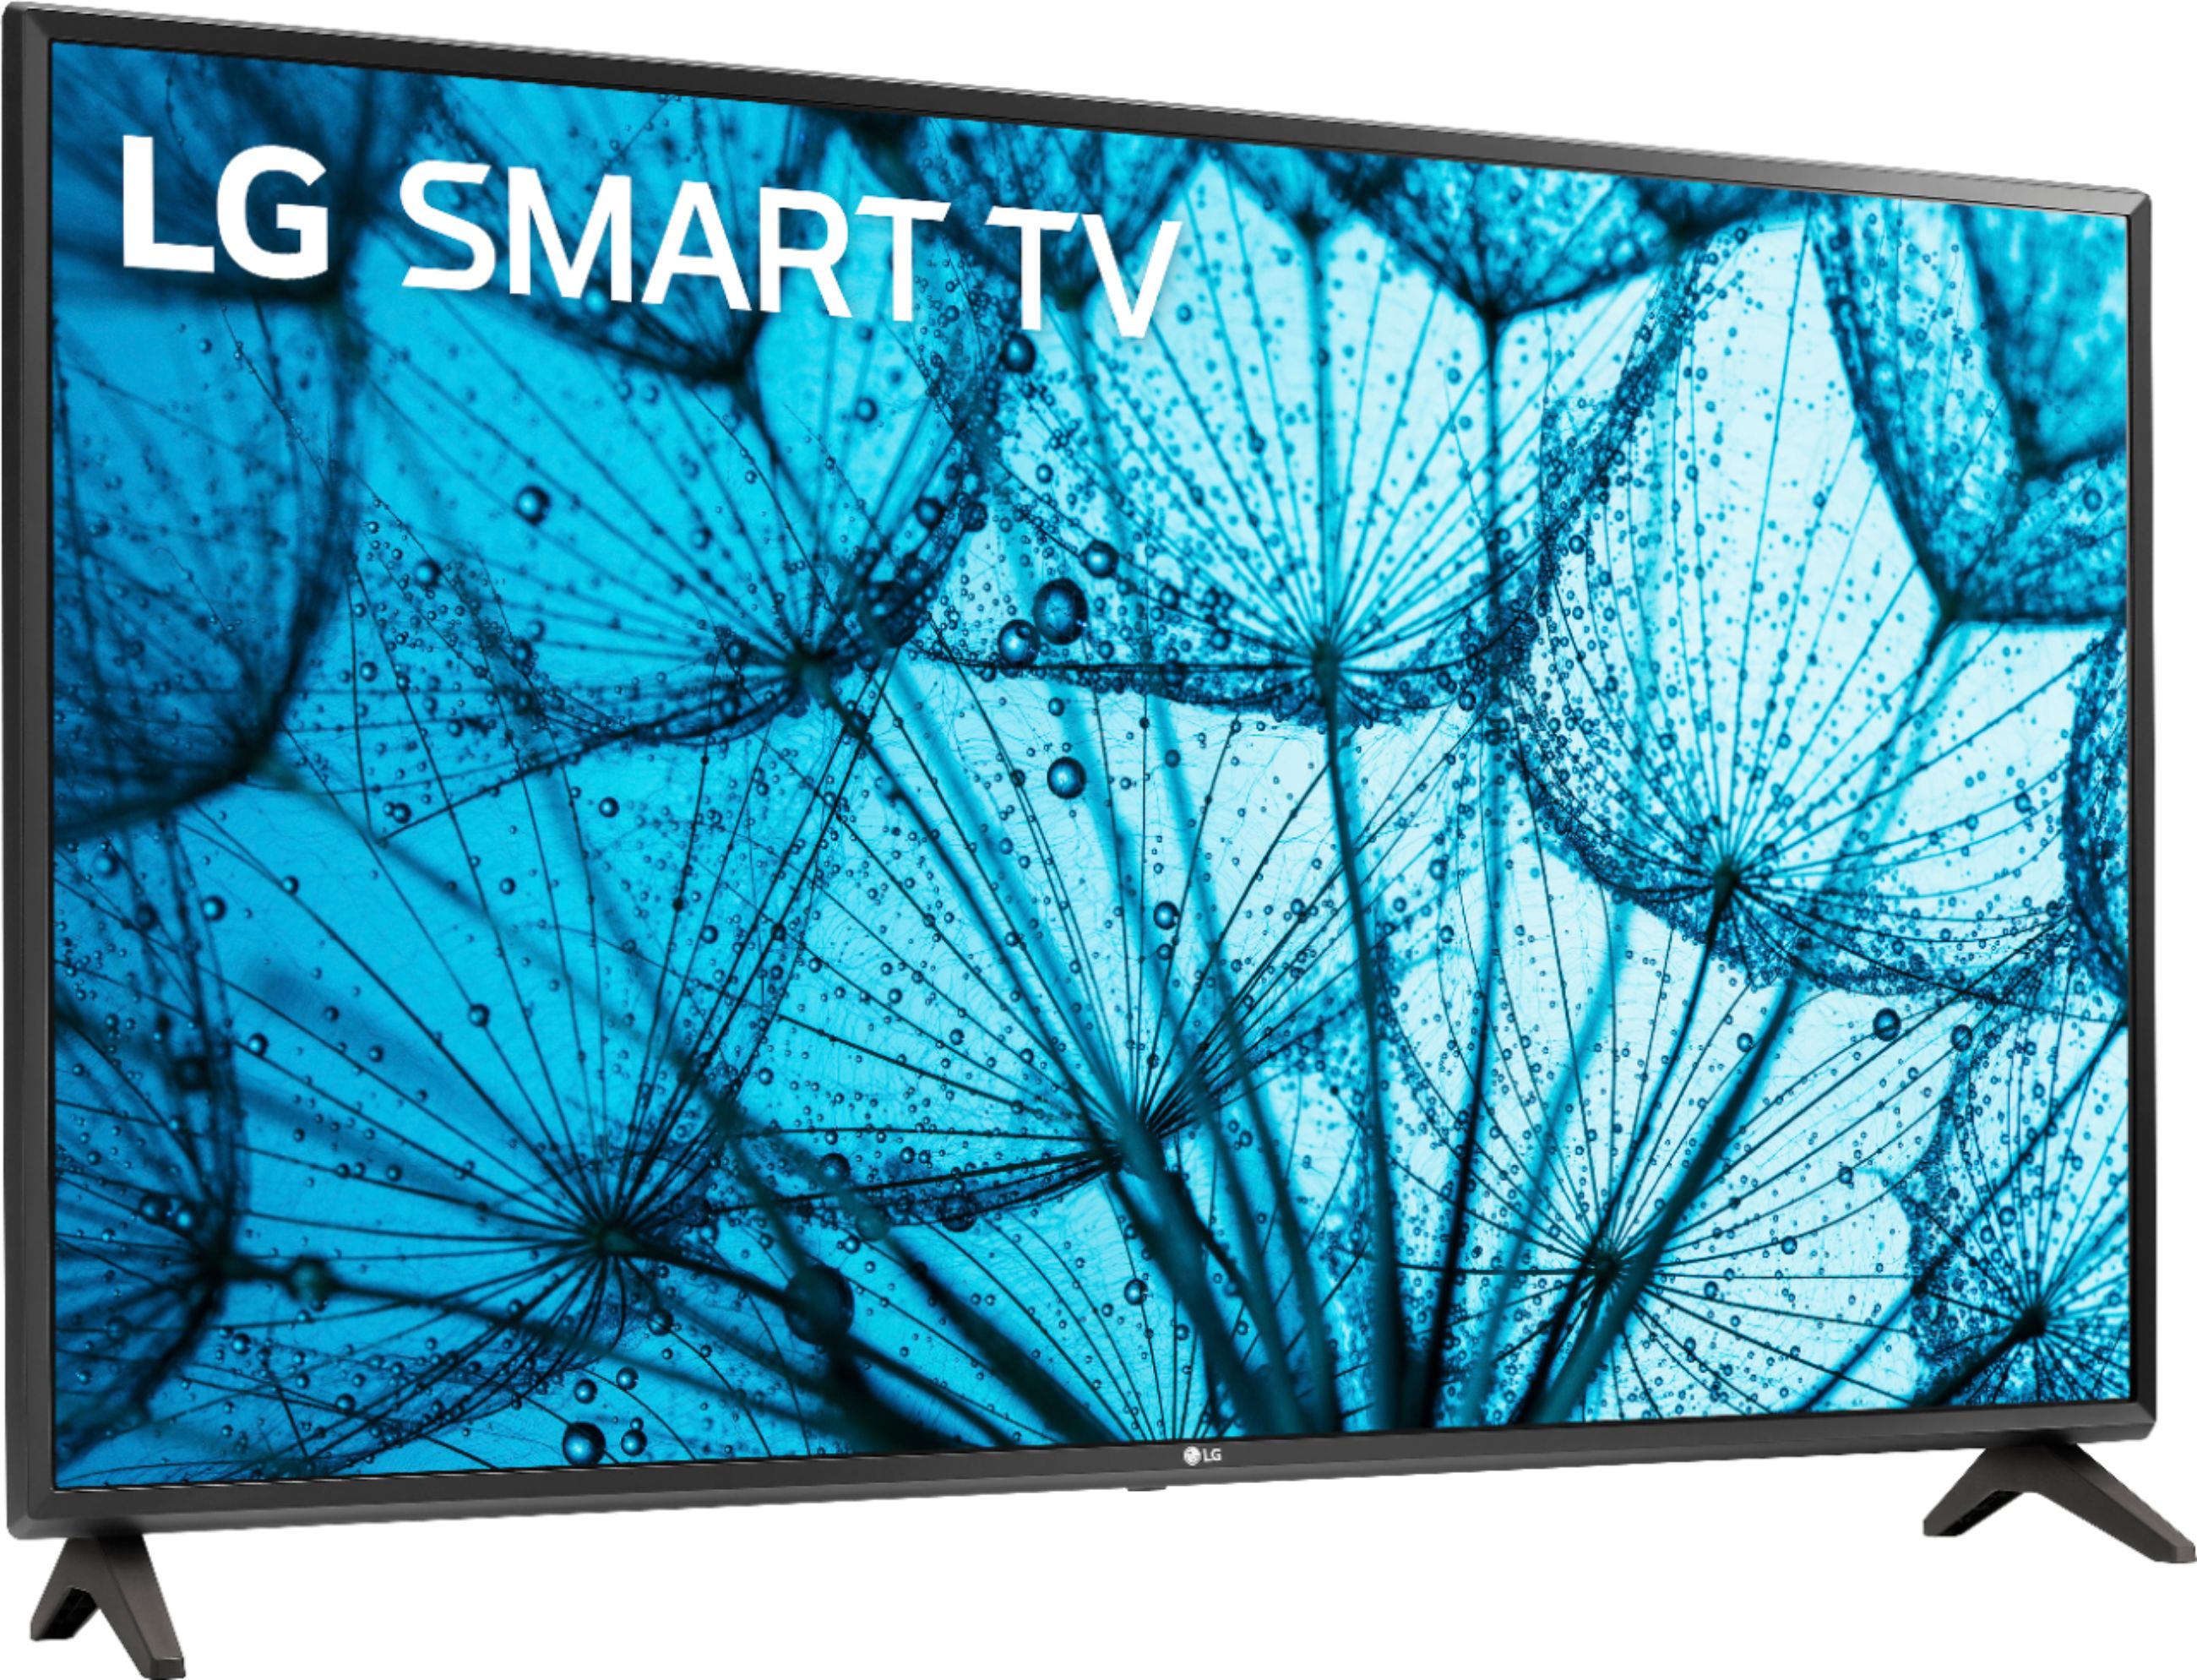 Angle View: LG 32" Class HDR Smart LED HD 720p TV - Black